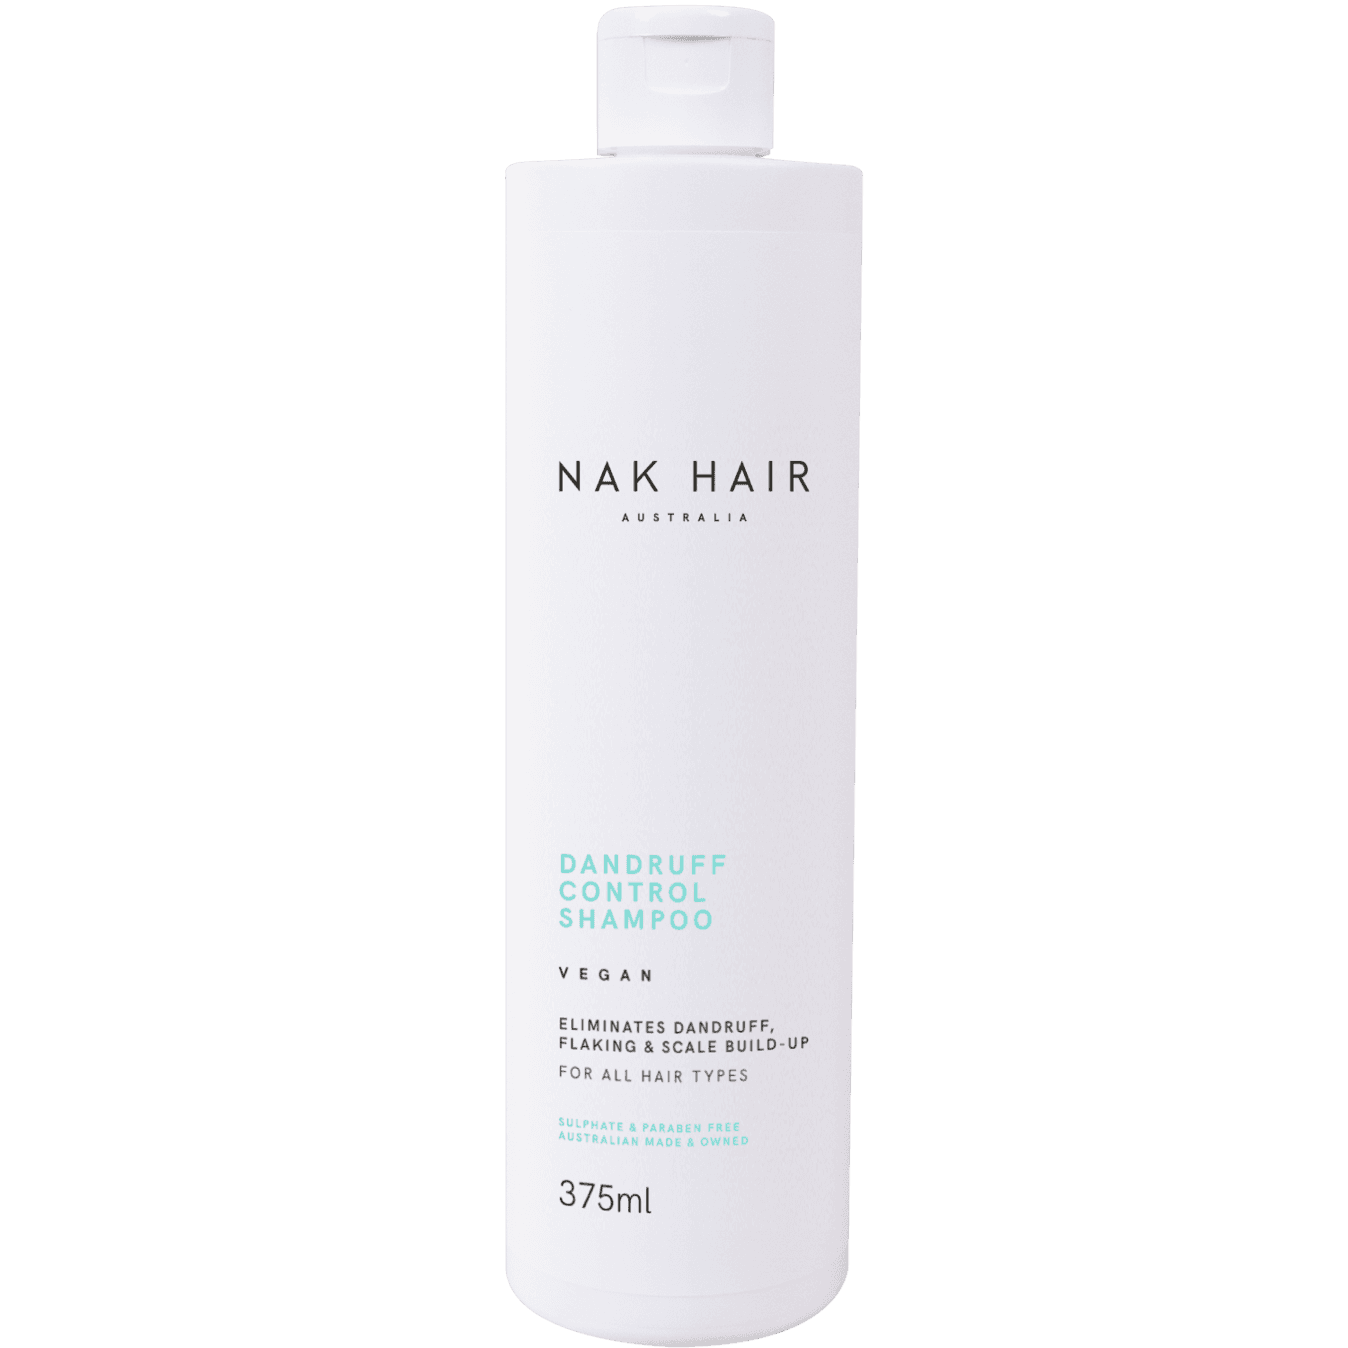 Nak Hair Dandruff Control Shampoo 375ml